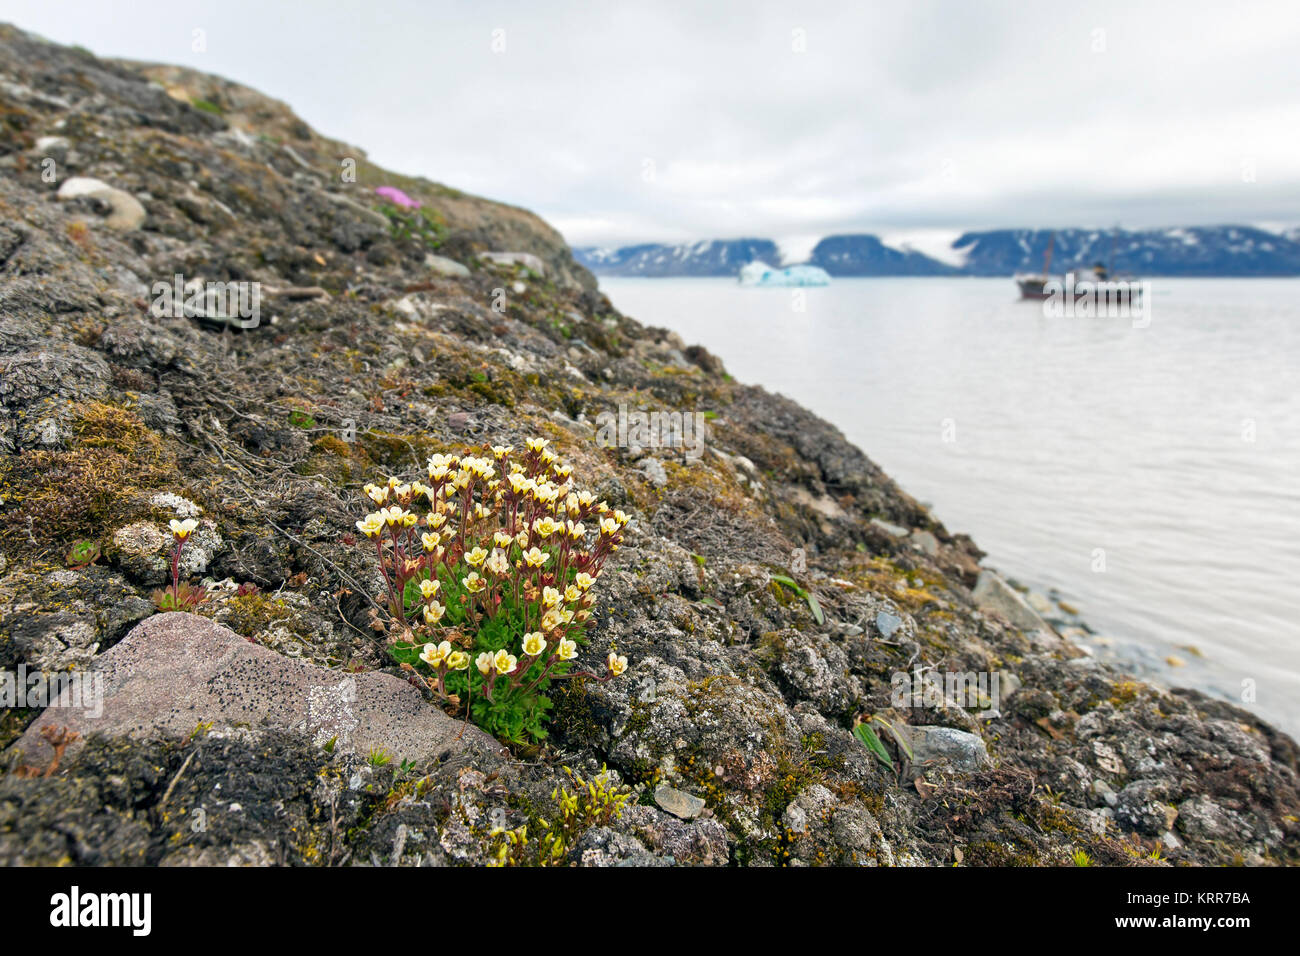 Tufted alpine saxifrage / tufted saxifrage (Saxifraga cespitosa) in flower on the Arctic tundra, Spitsbergen / Svalbard, Norway Stock Photo